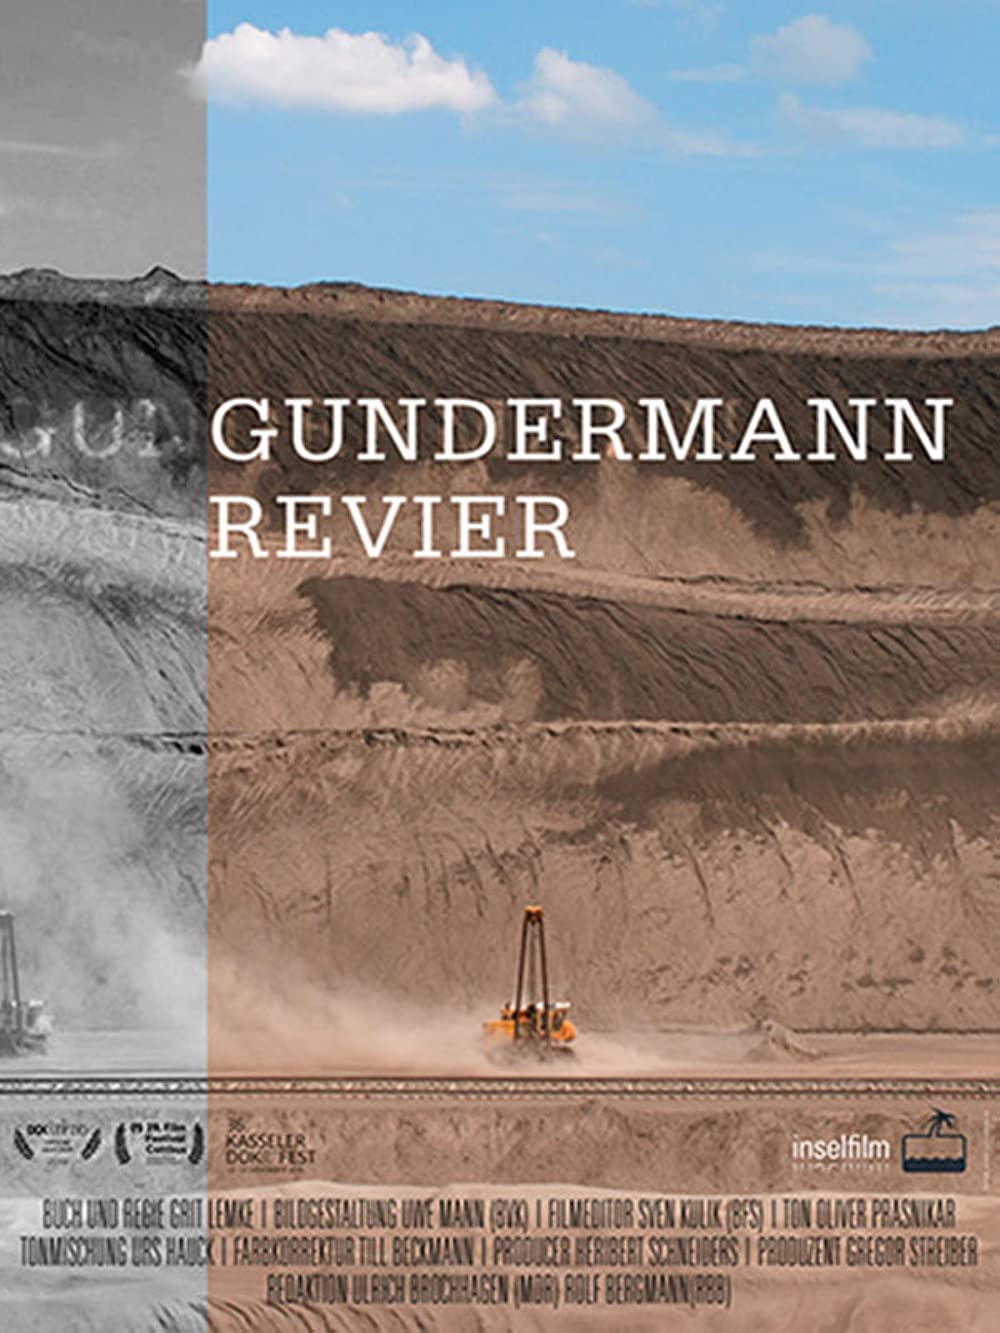 Filmbeschreibung zu Gundermann Revier